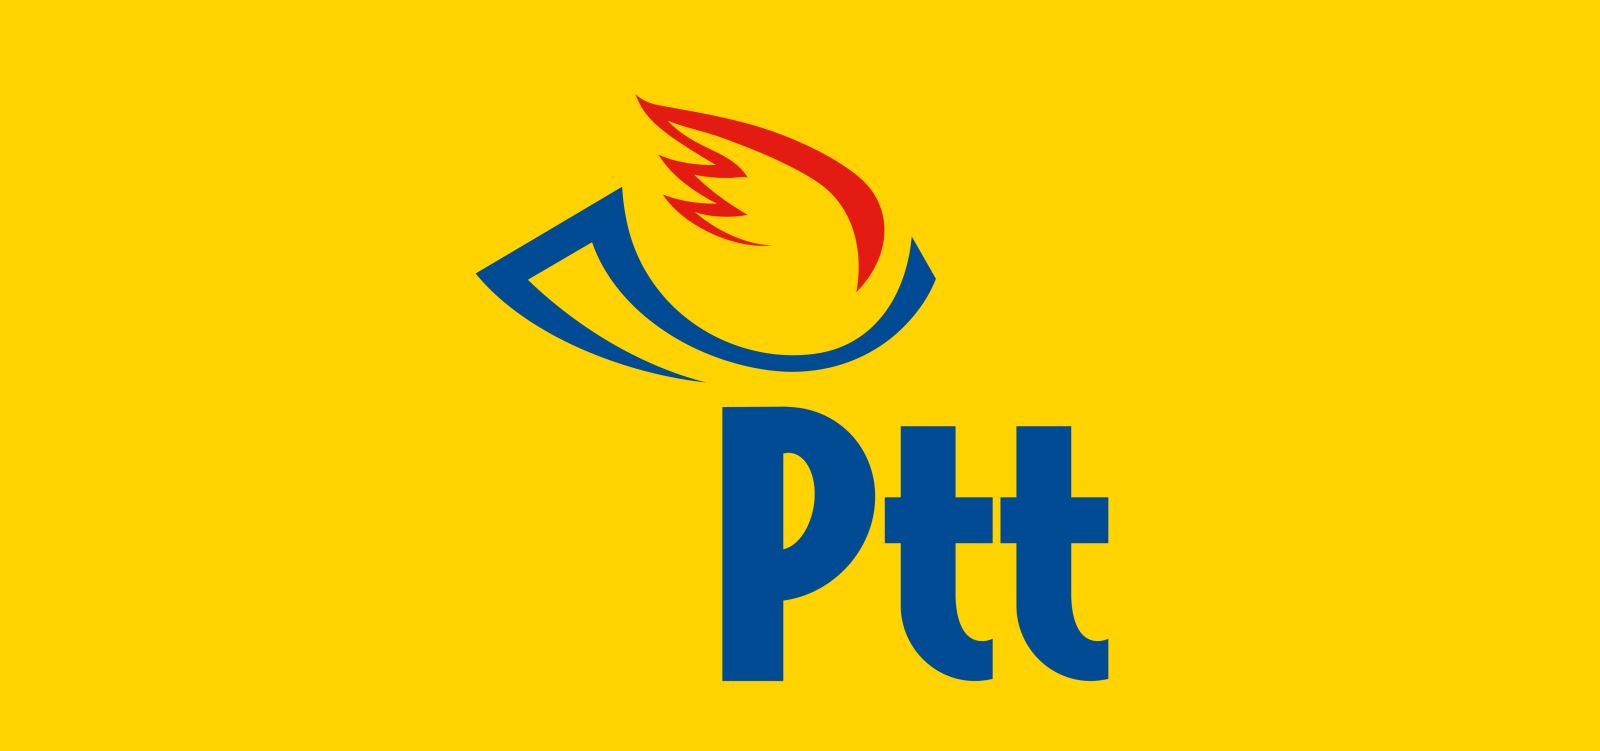 ptt-logo - PetroTurk